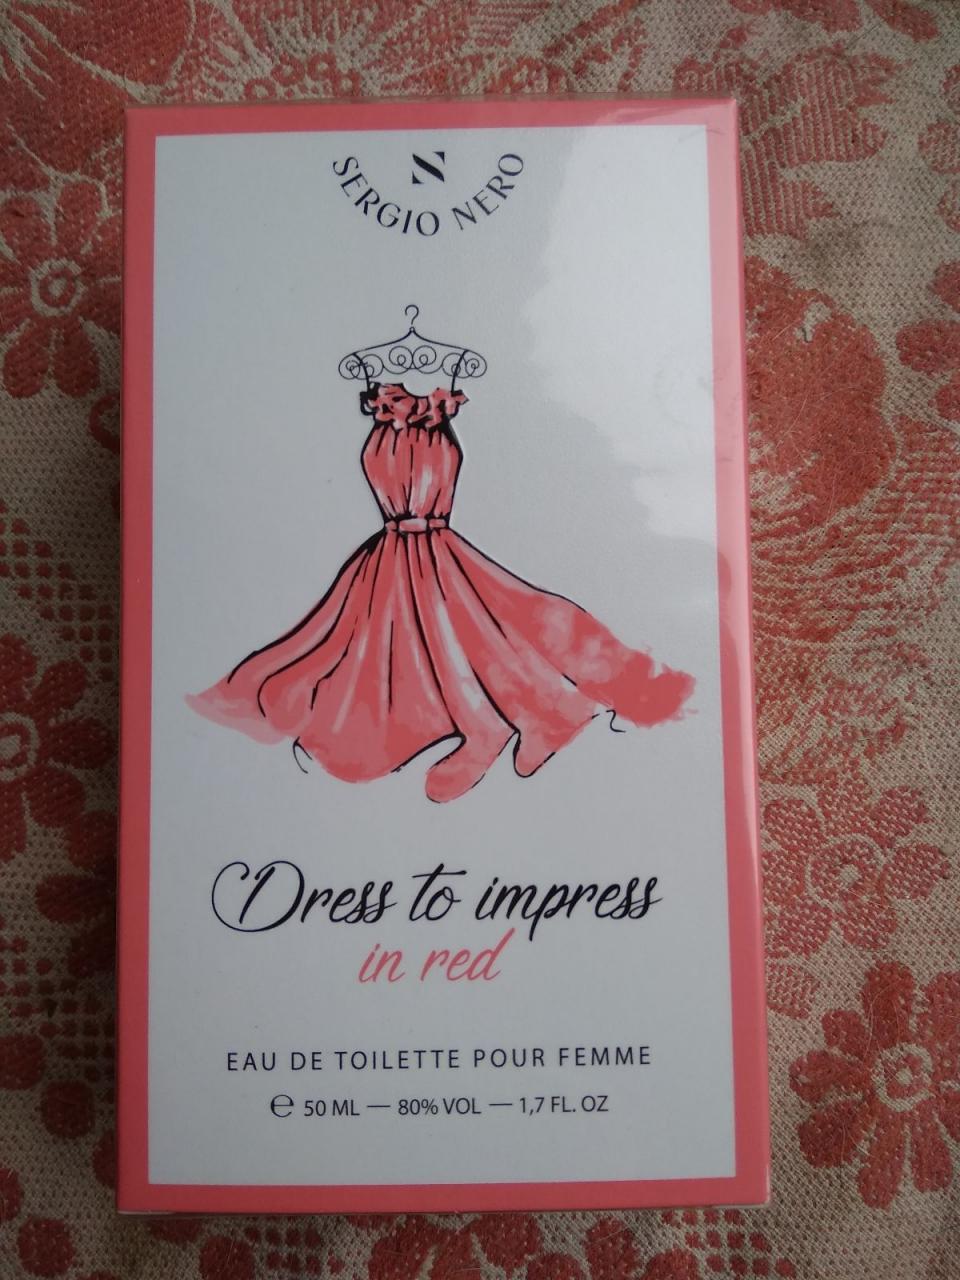 Отзыв на товар: Туалетная вода женская Dress to impress In red. Sergio Nero.